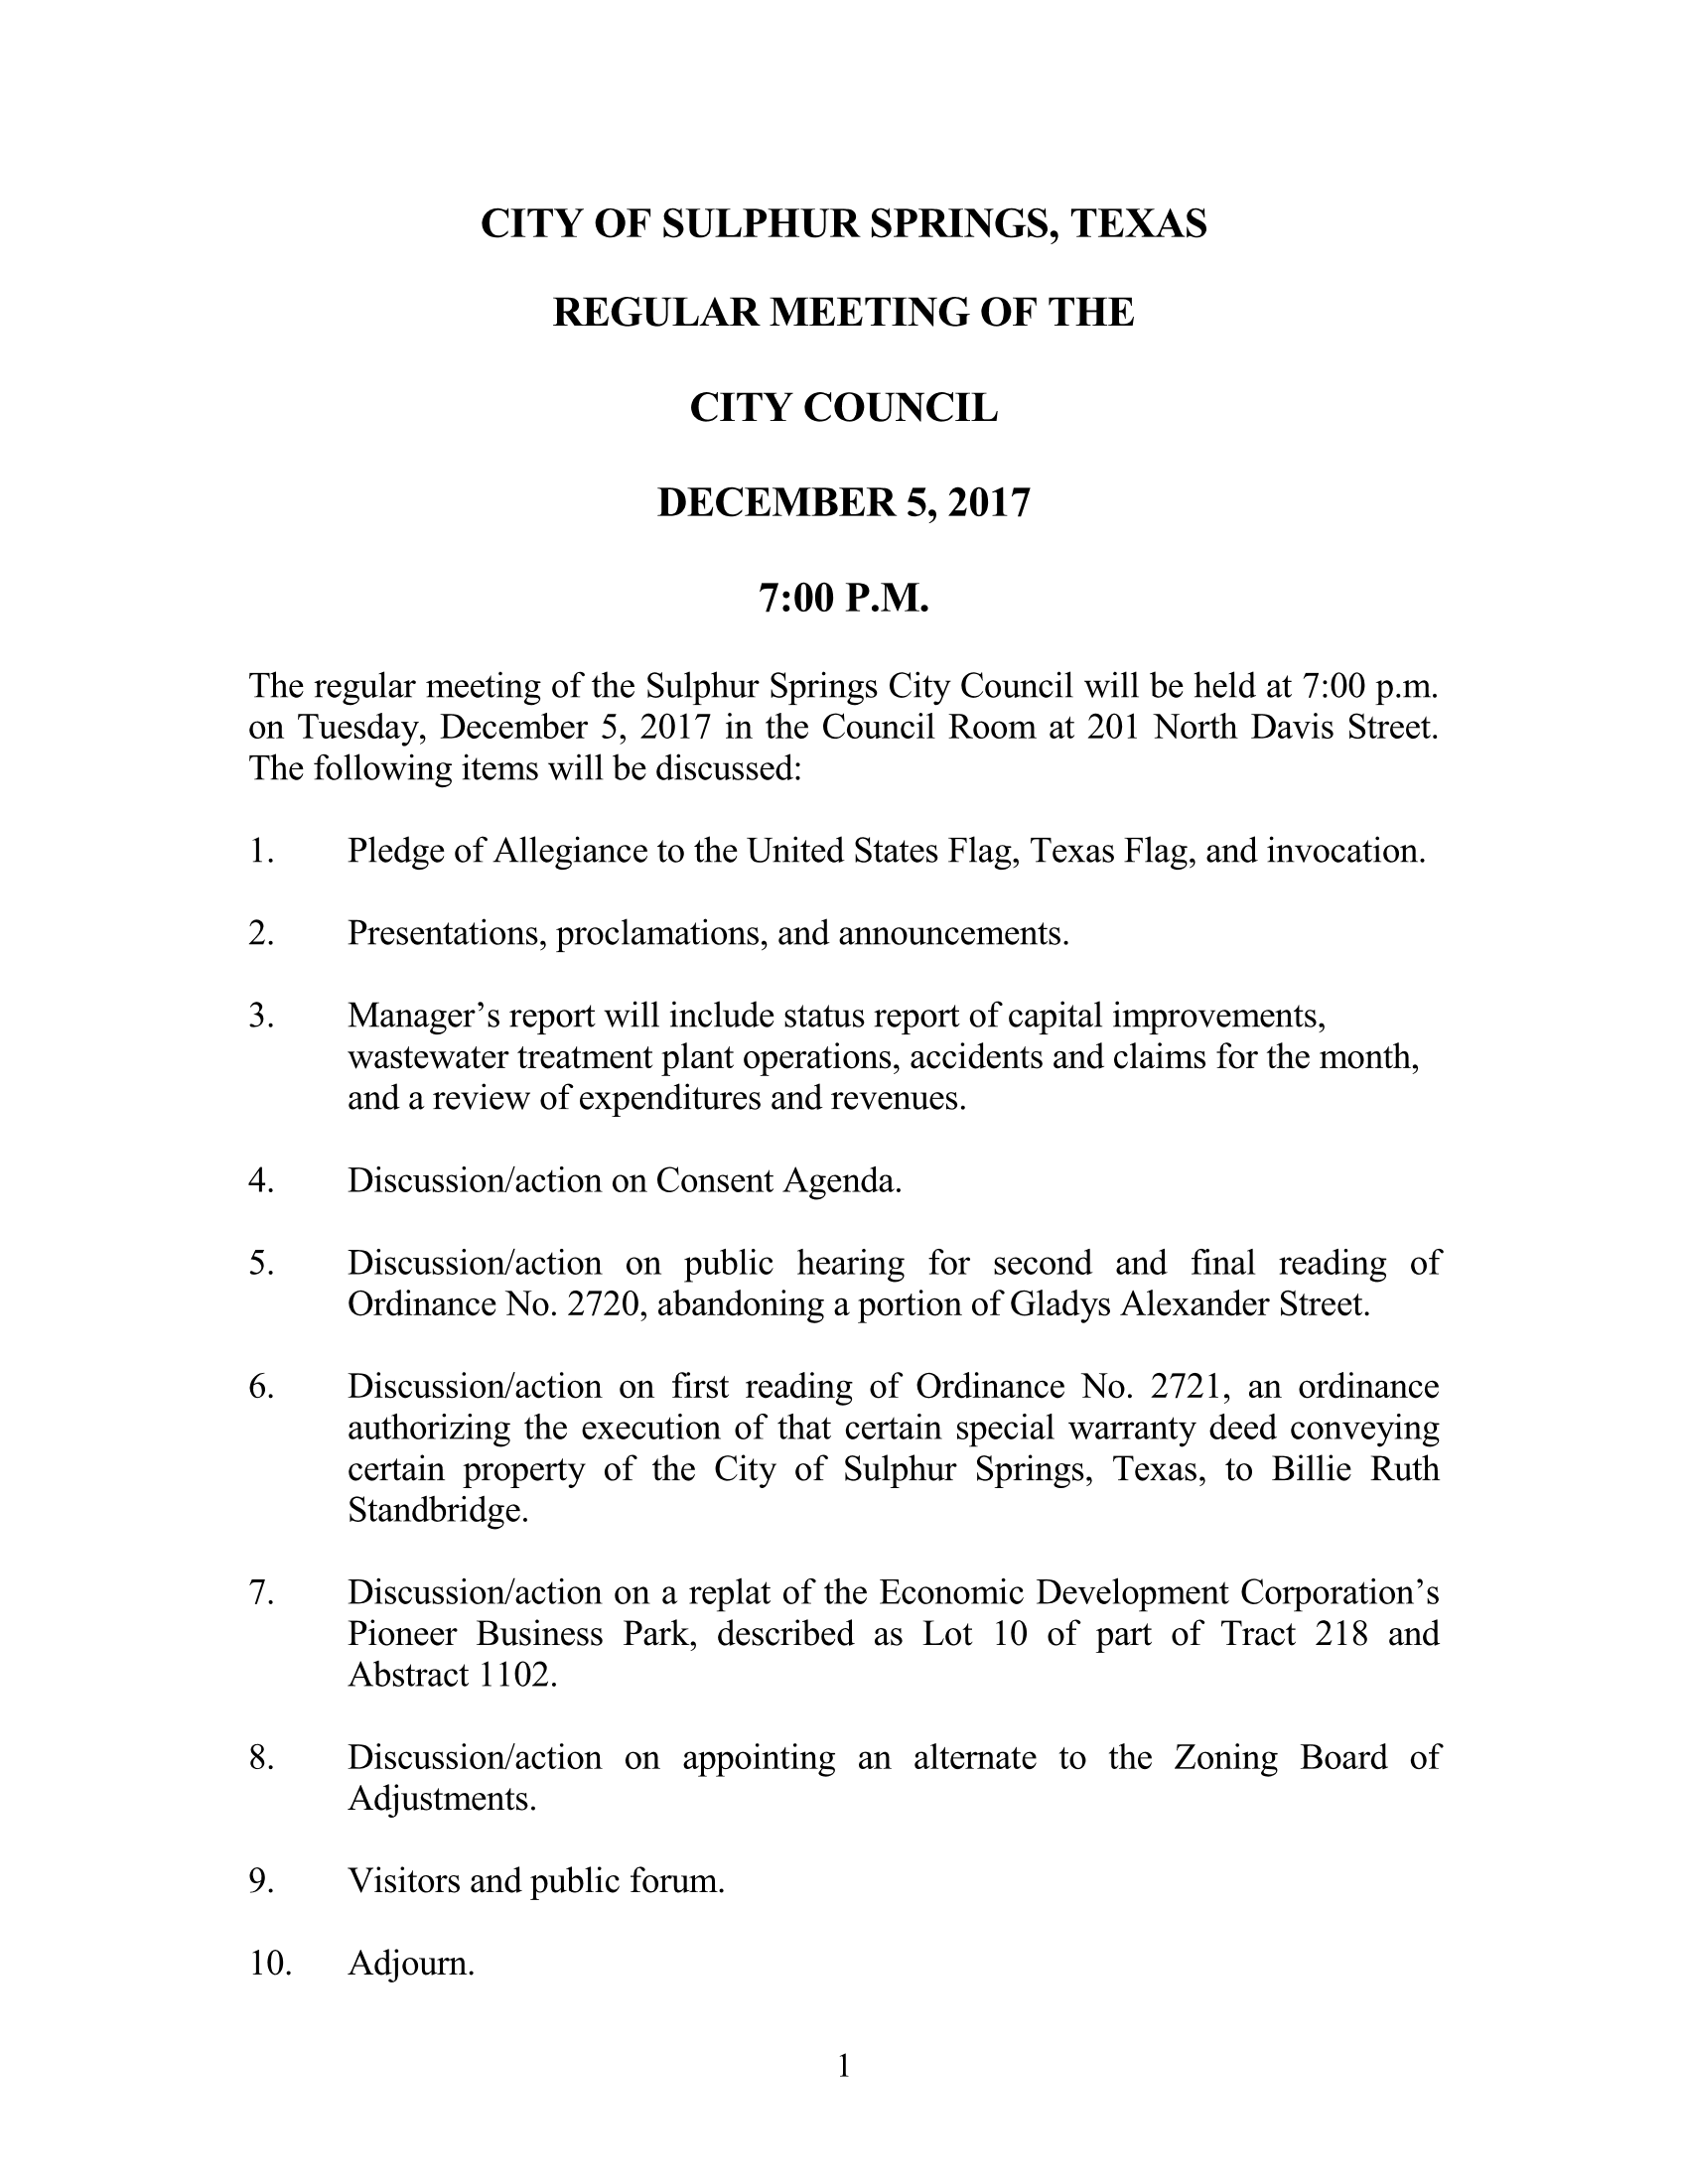 December 5th Sulphur Springs City Council Meeting Agenda